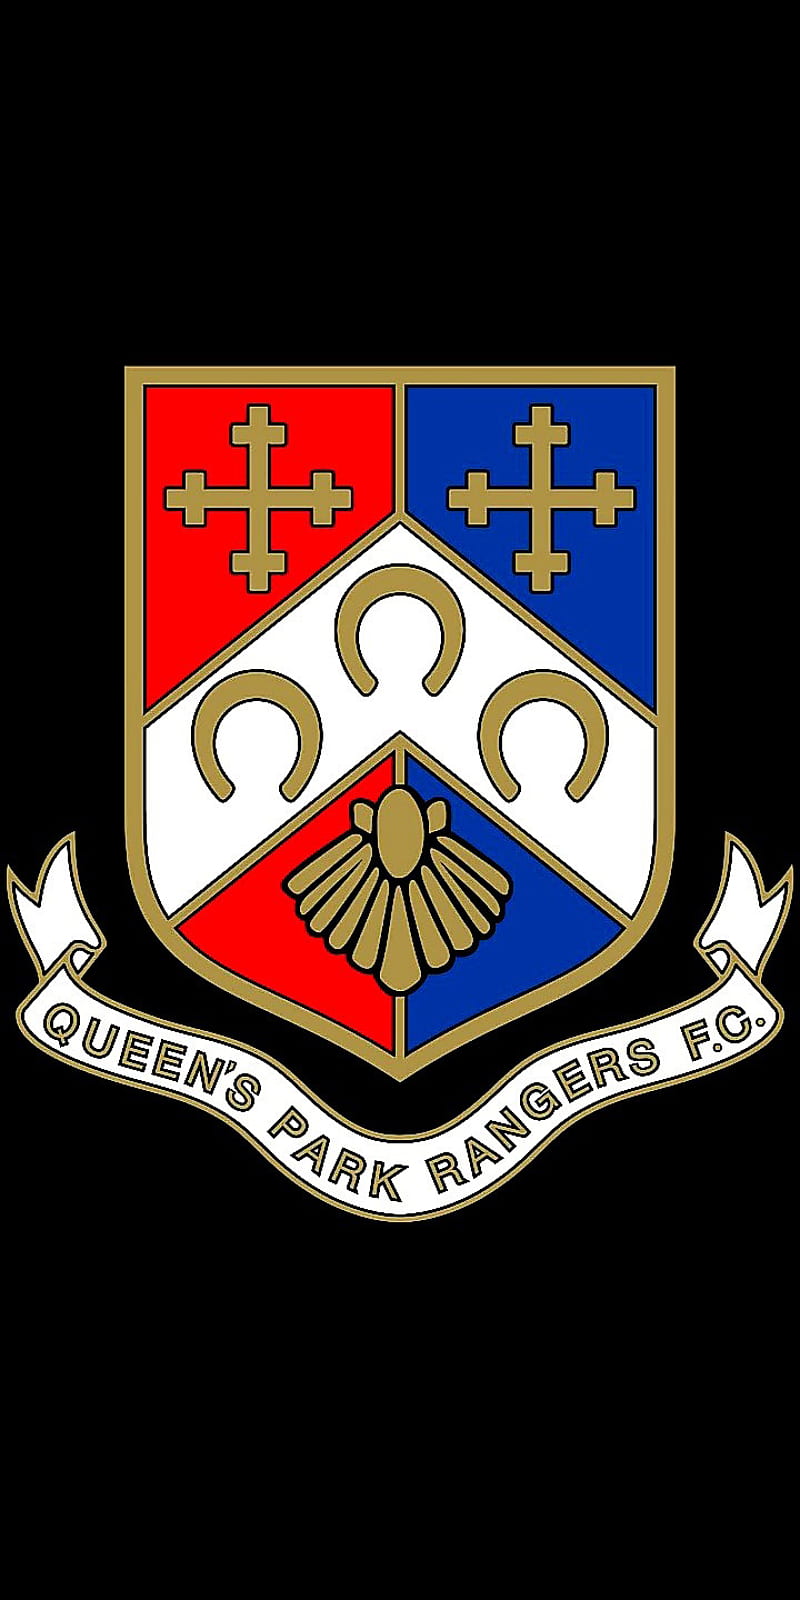 Queens park rangers f.c. lwn manchester united f.c.